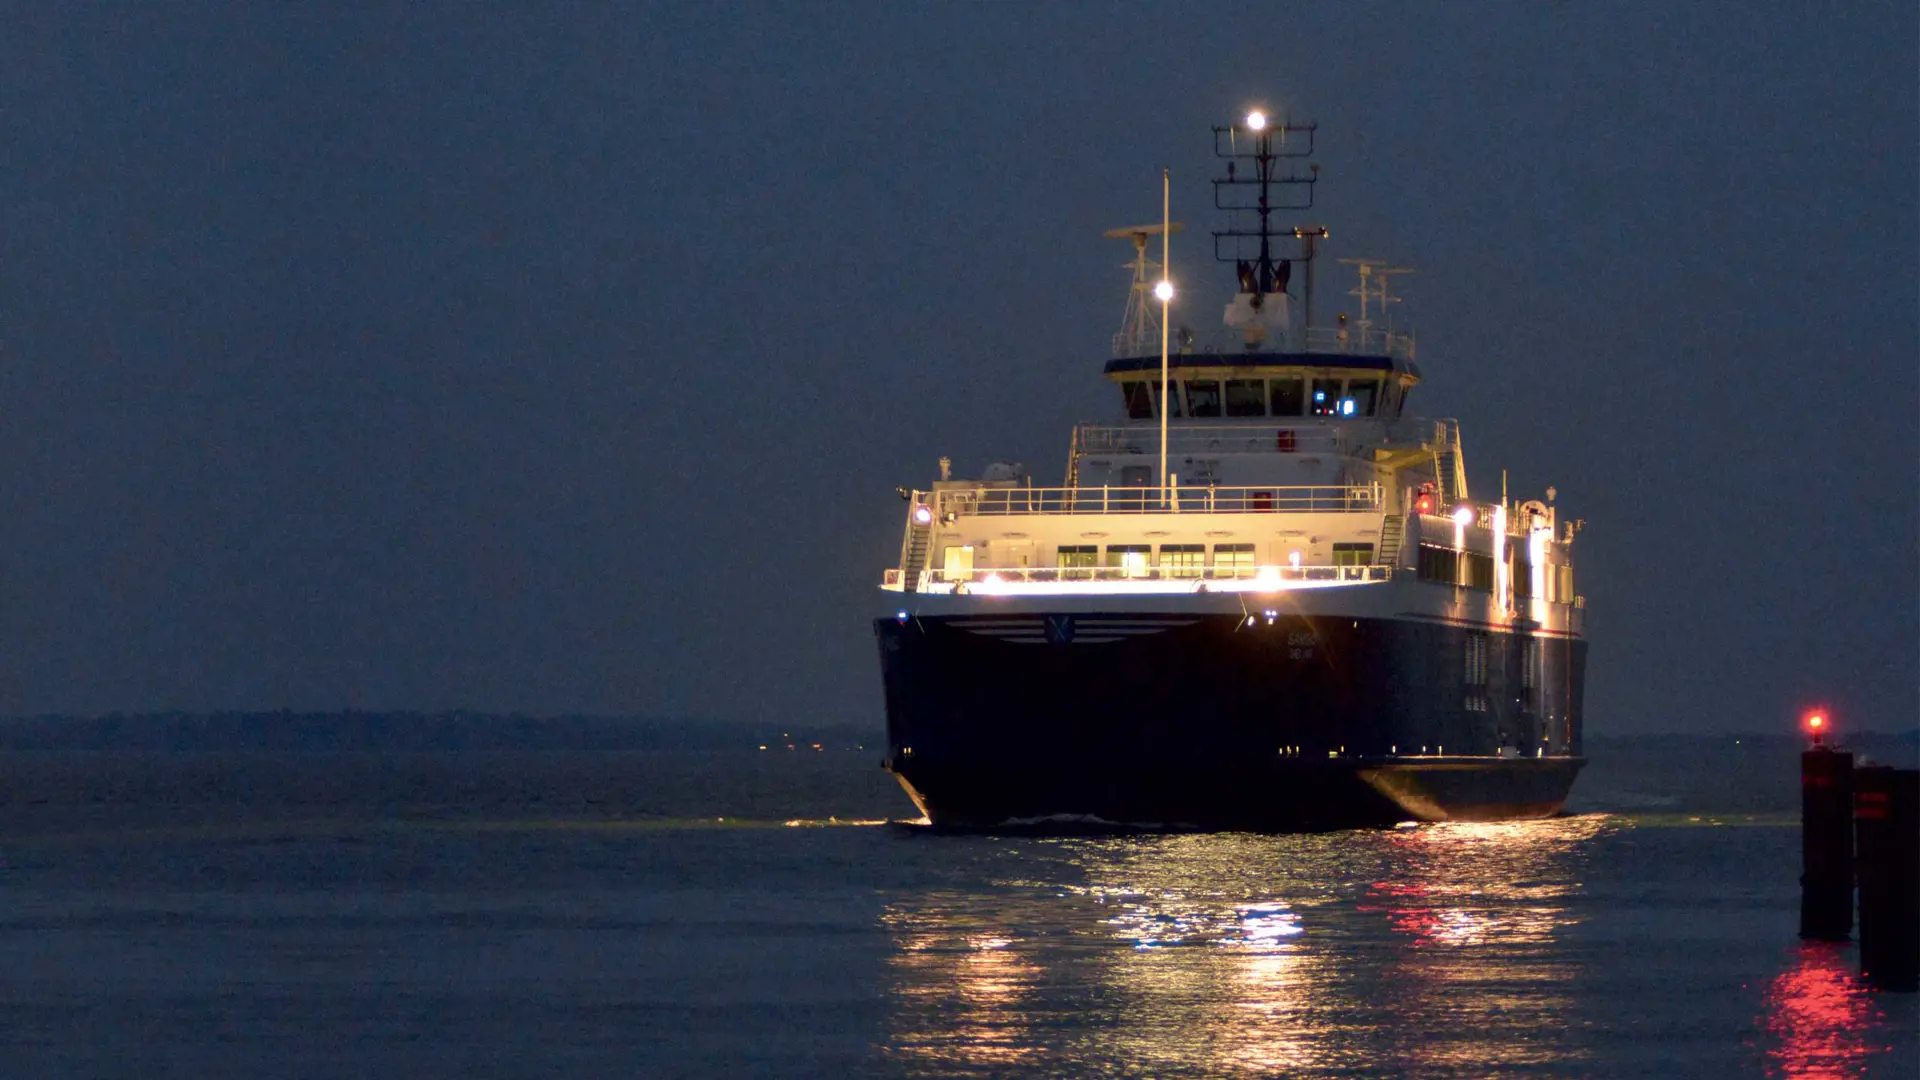 Samsoe ferry at nighttime